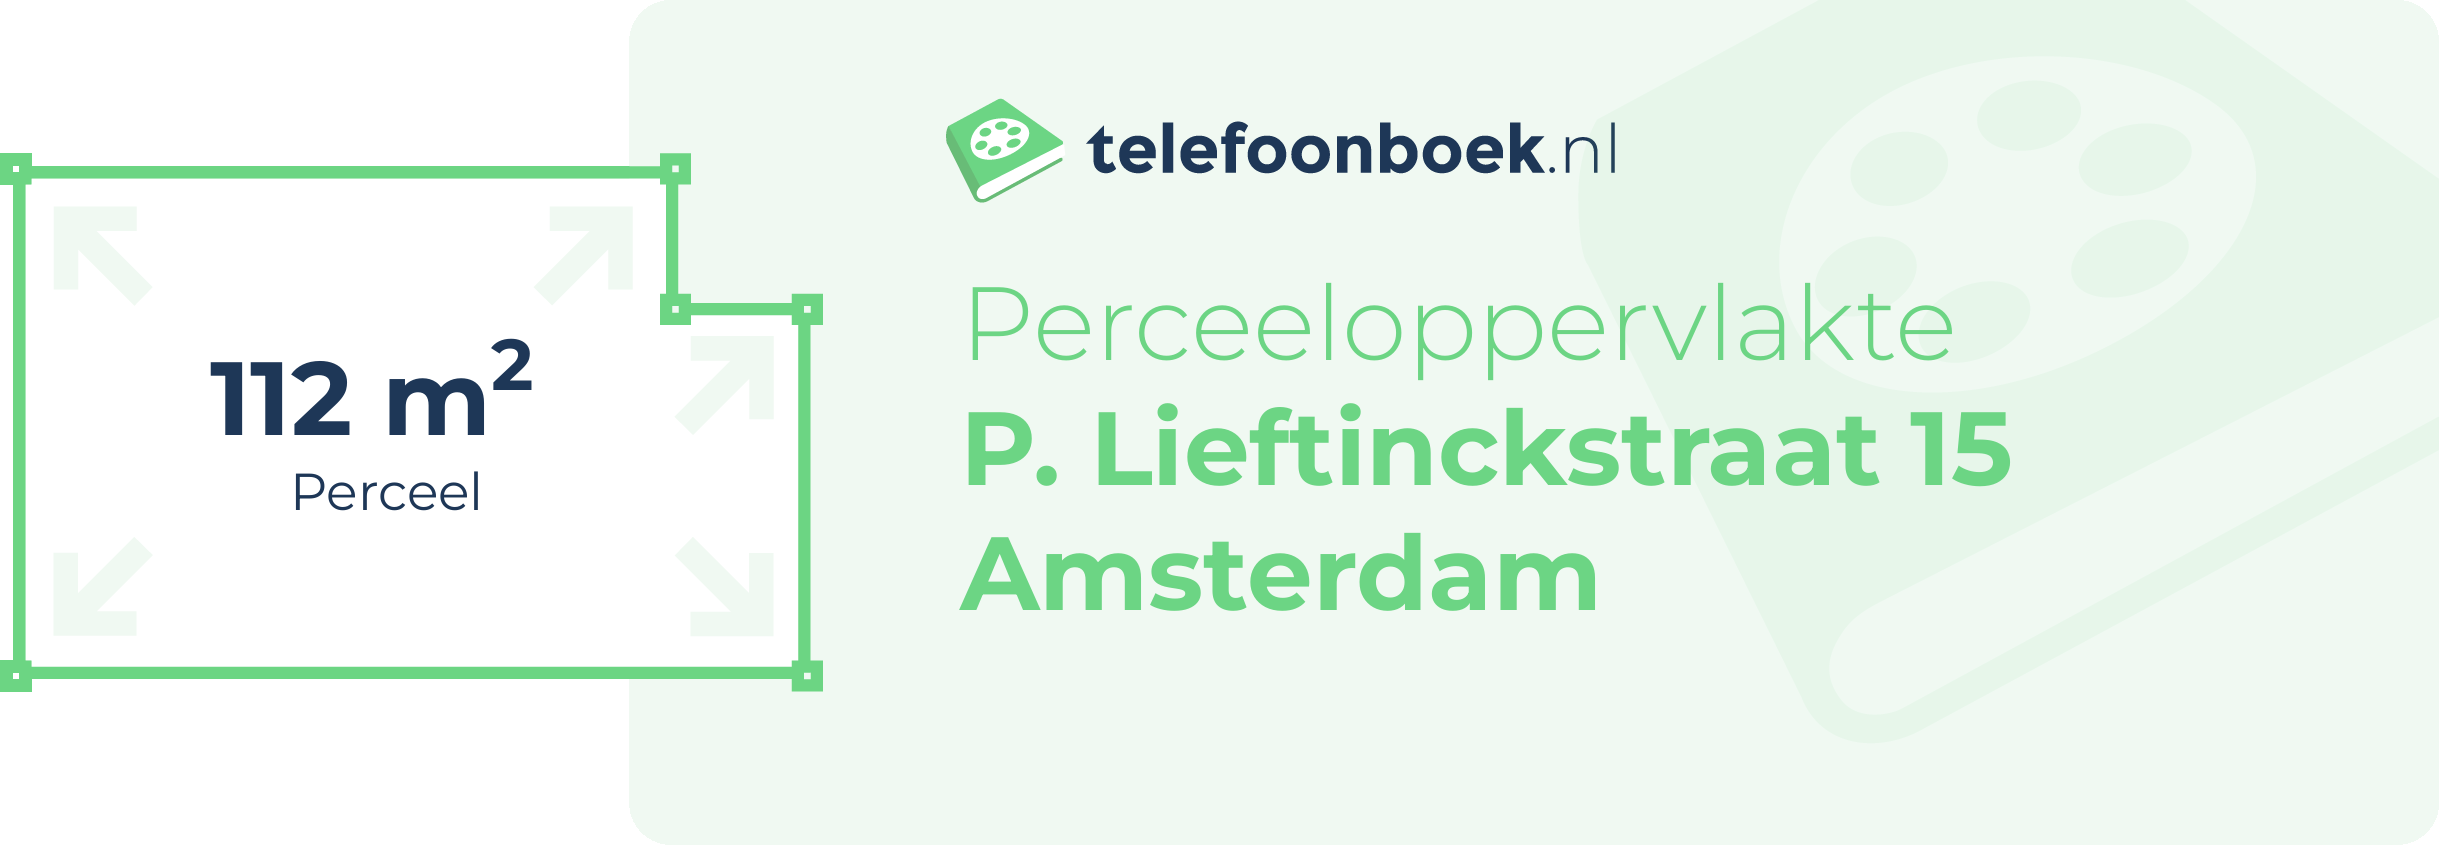 Perceeloppervlakte P. Lieftinckstraat 15 Amsterdam